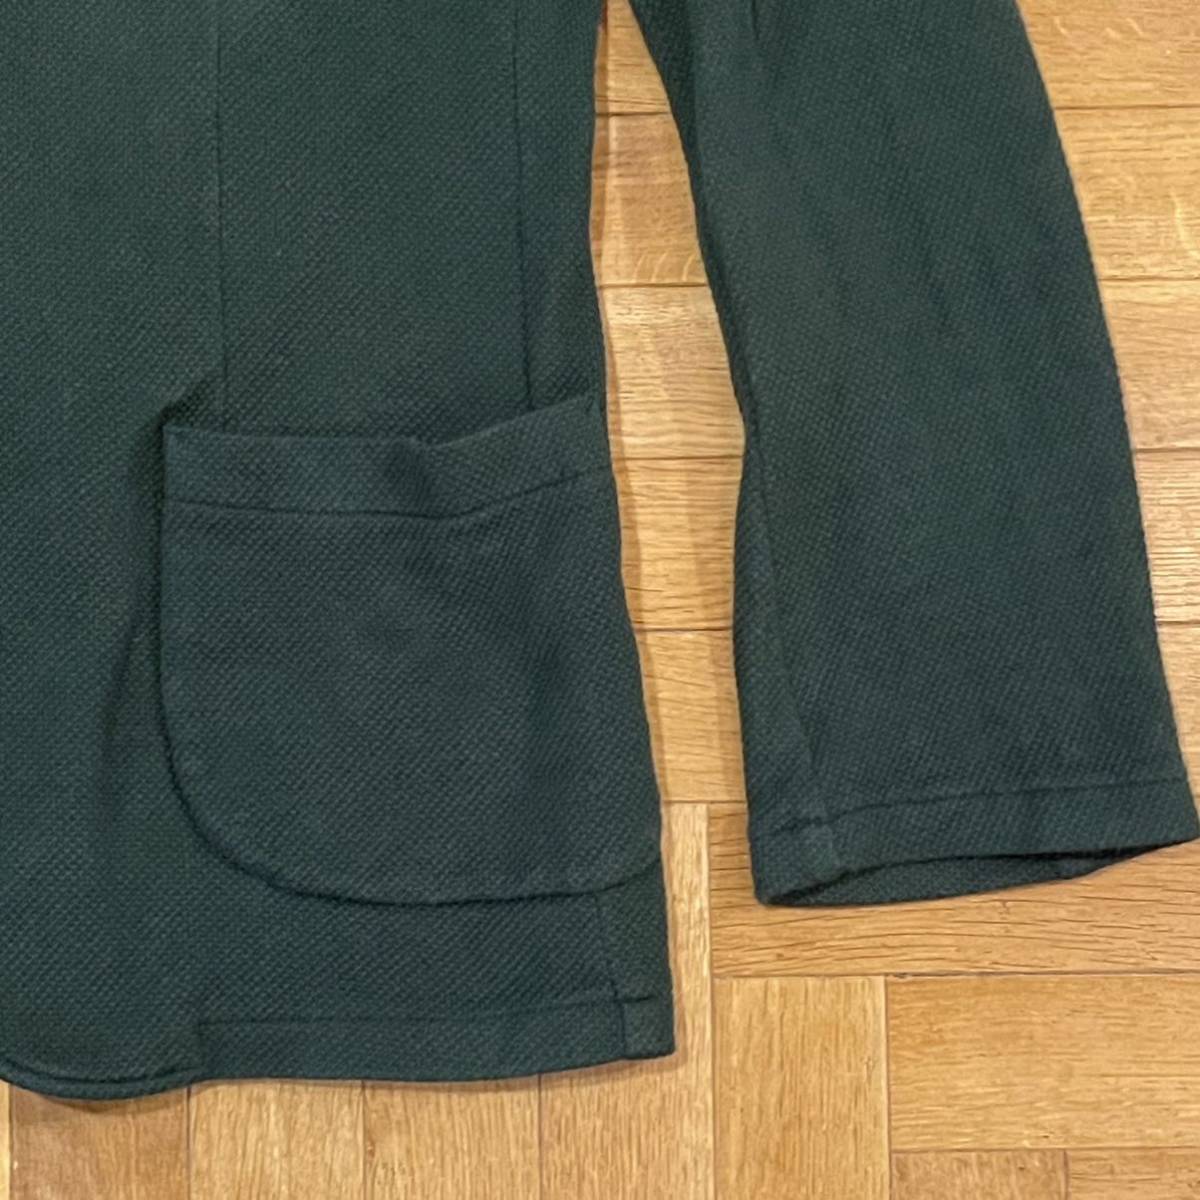 MORRIS & SONS 鹿の子テーラードジャケット サイズ表記3 日本製 グリーン コットンナイロン 中古品 14S-KN-003 ブレザー Bishop _画像6